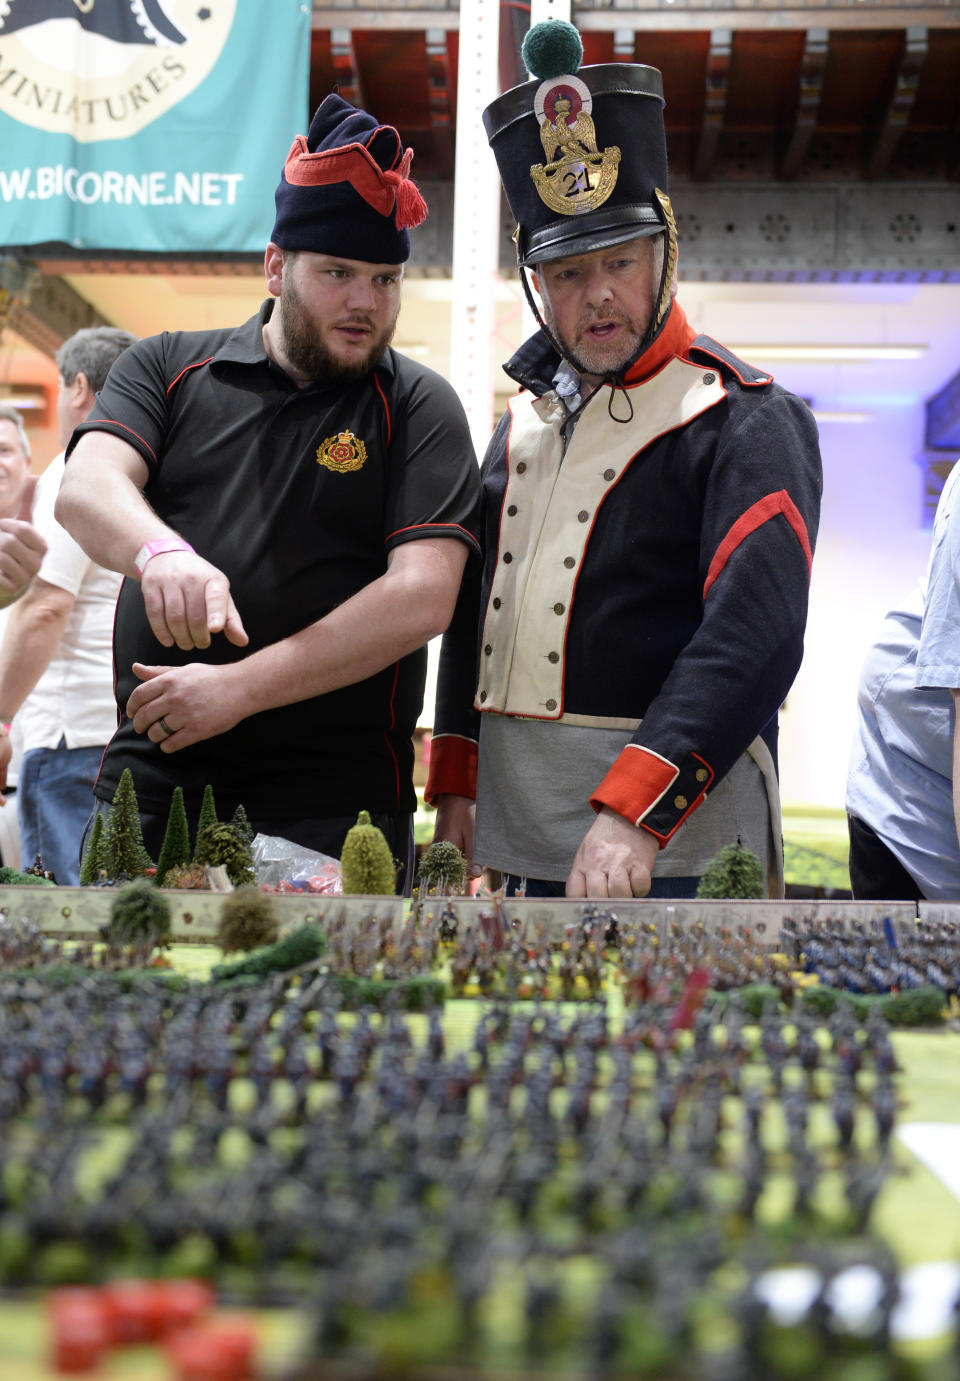 Battle of Waterloo reenacted in world's biggest table top war game